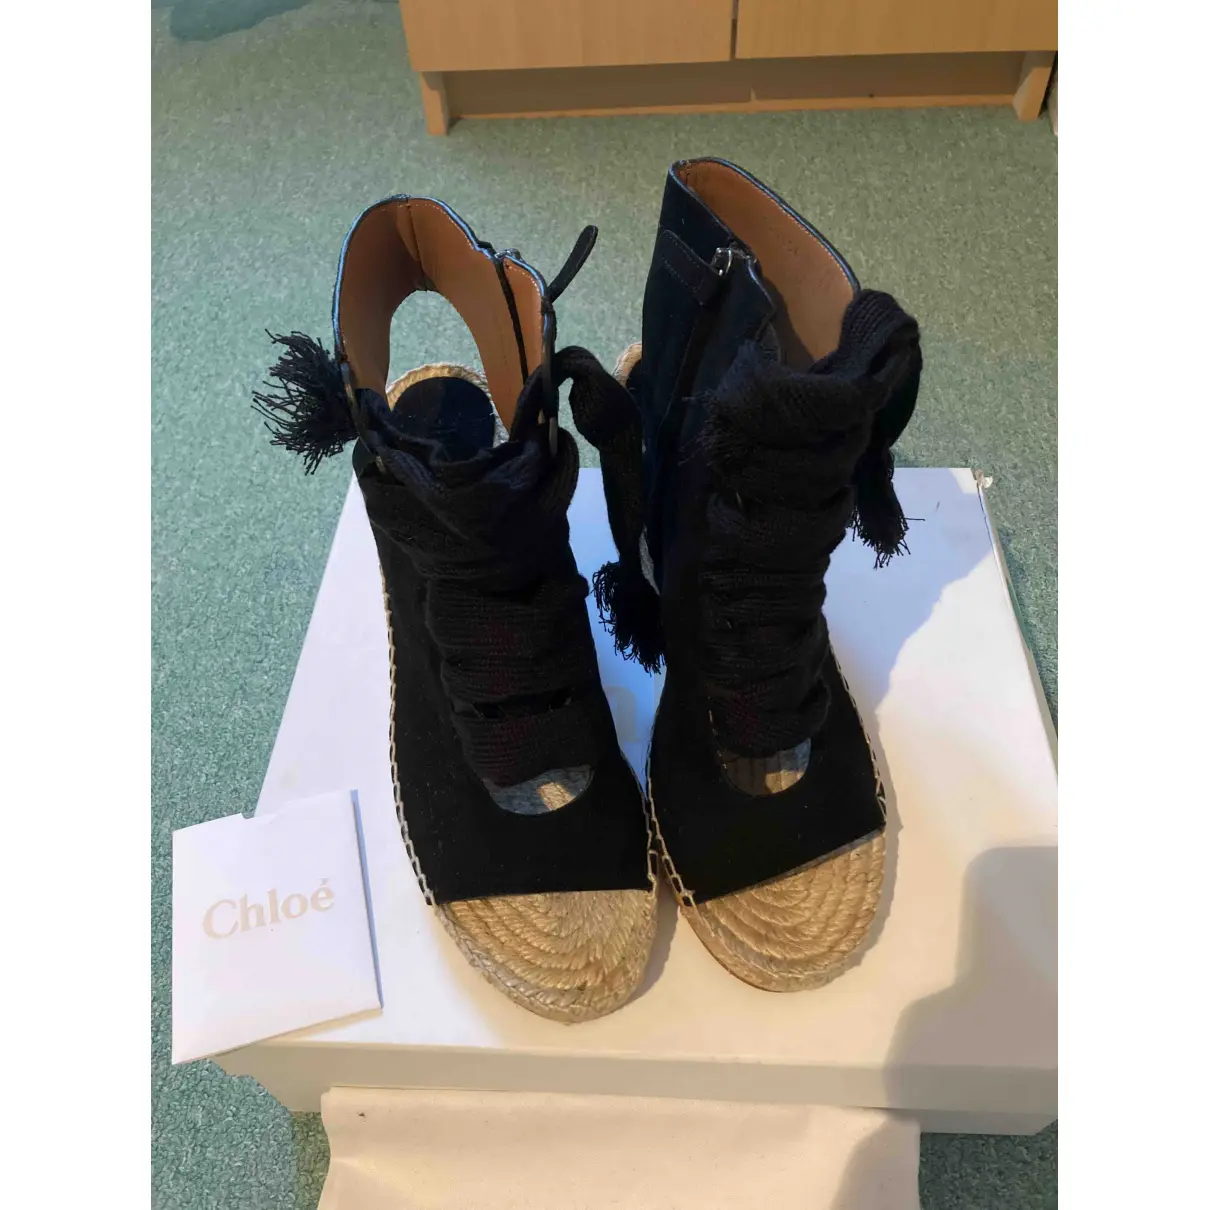 Buy Chloé Leather espadrilles online